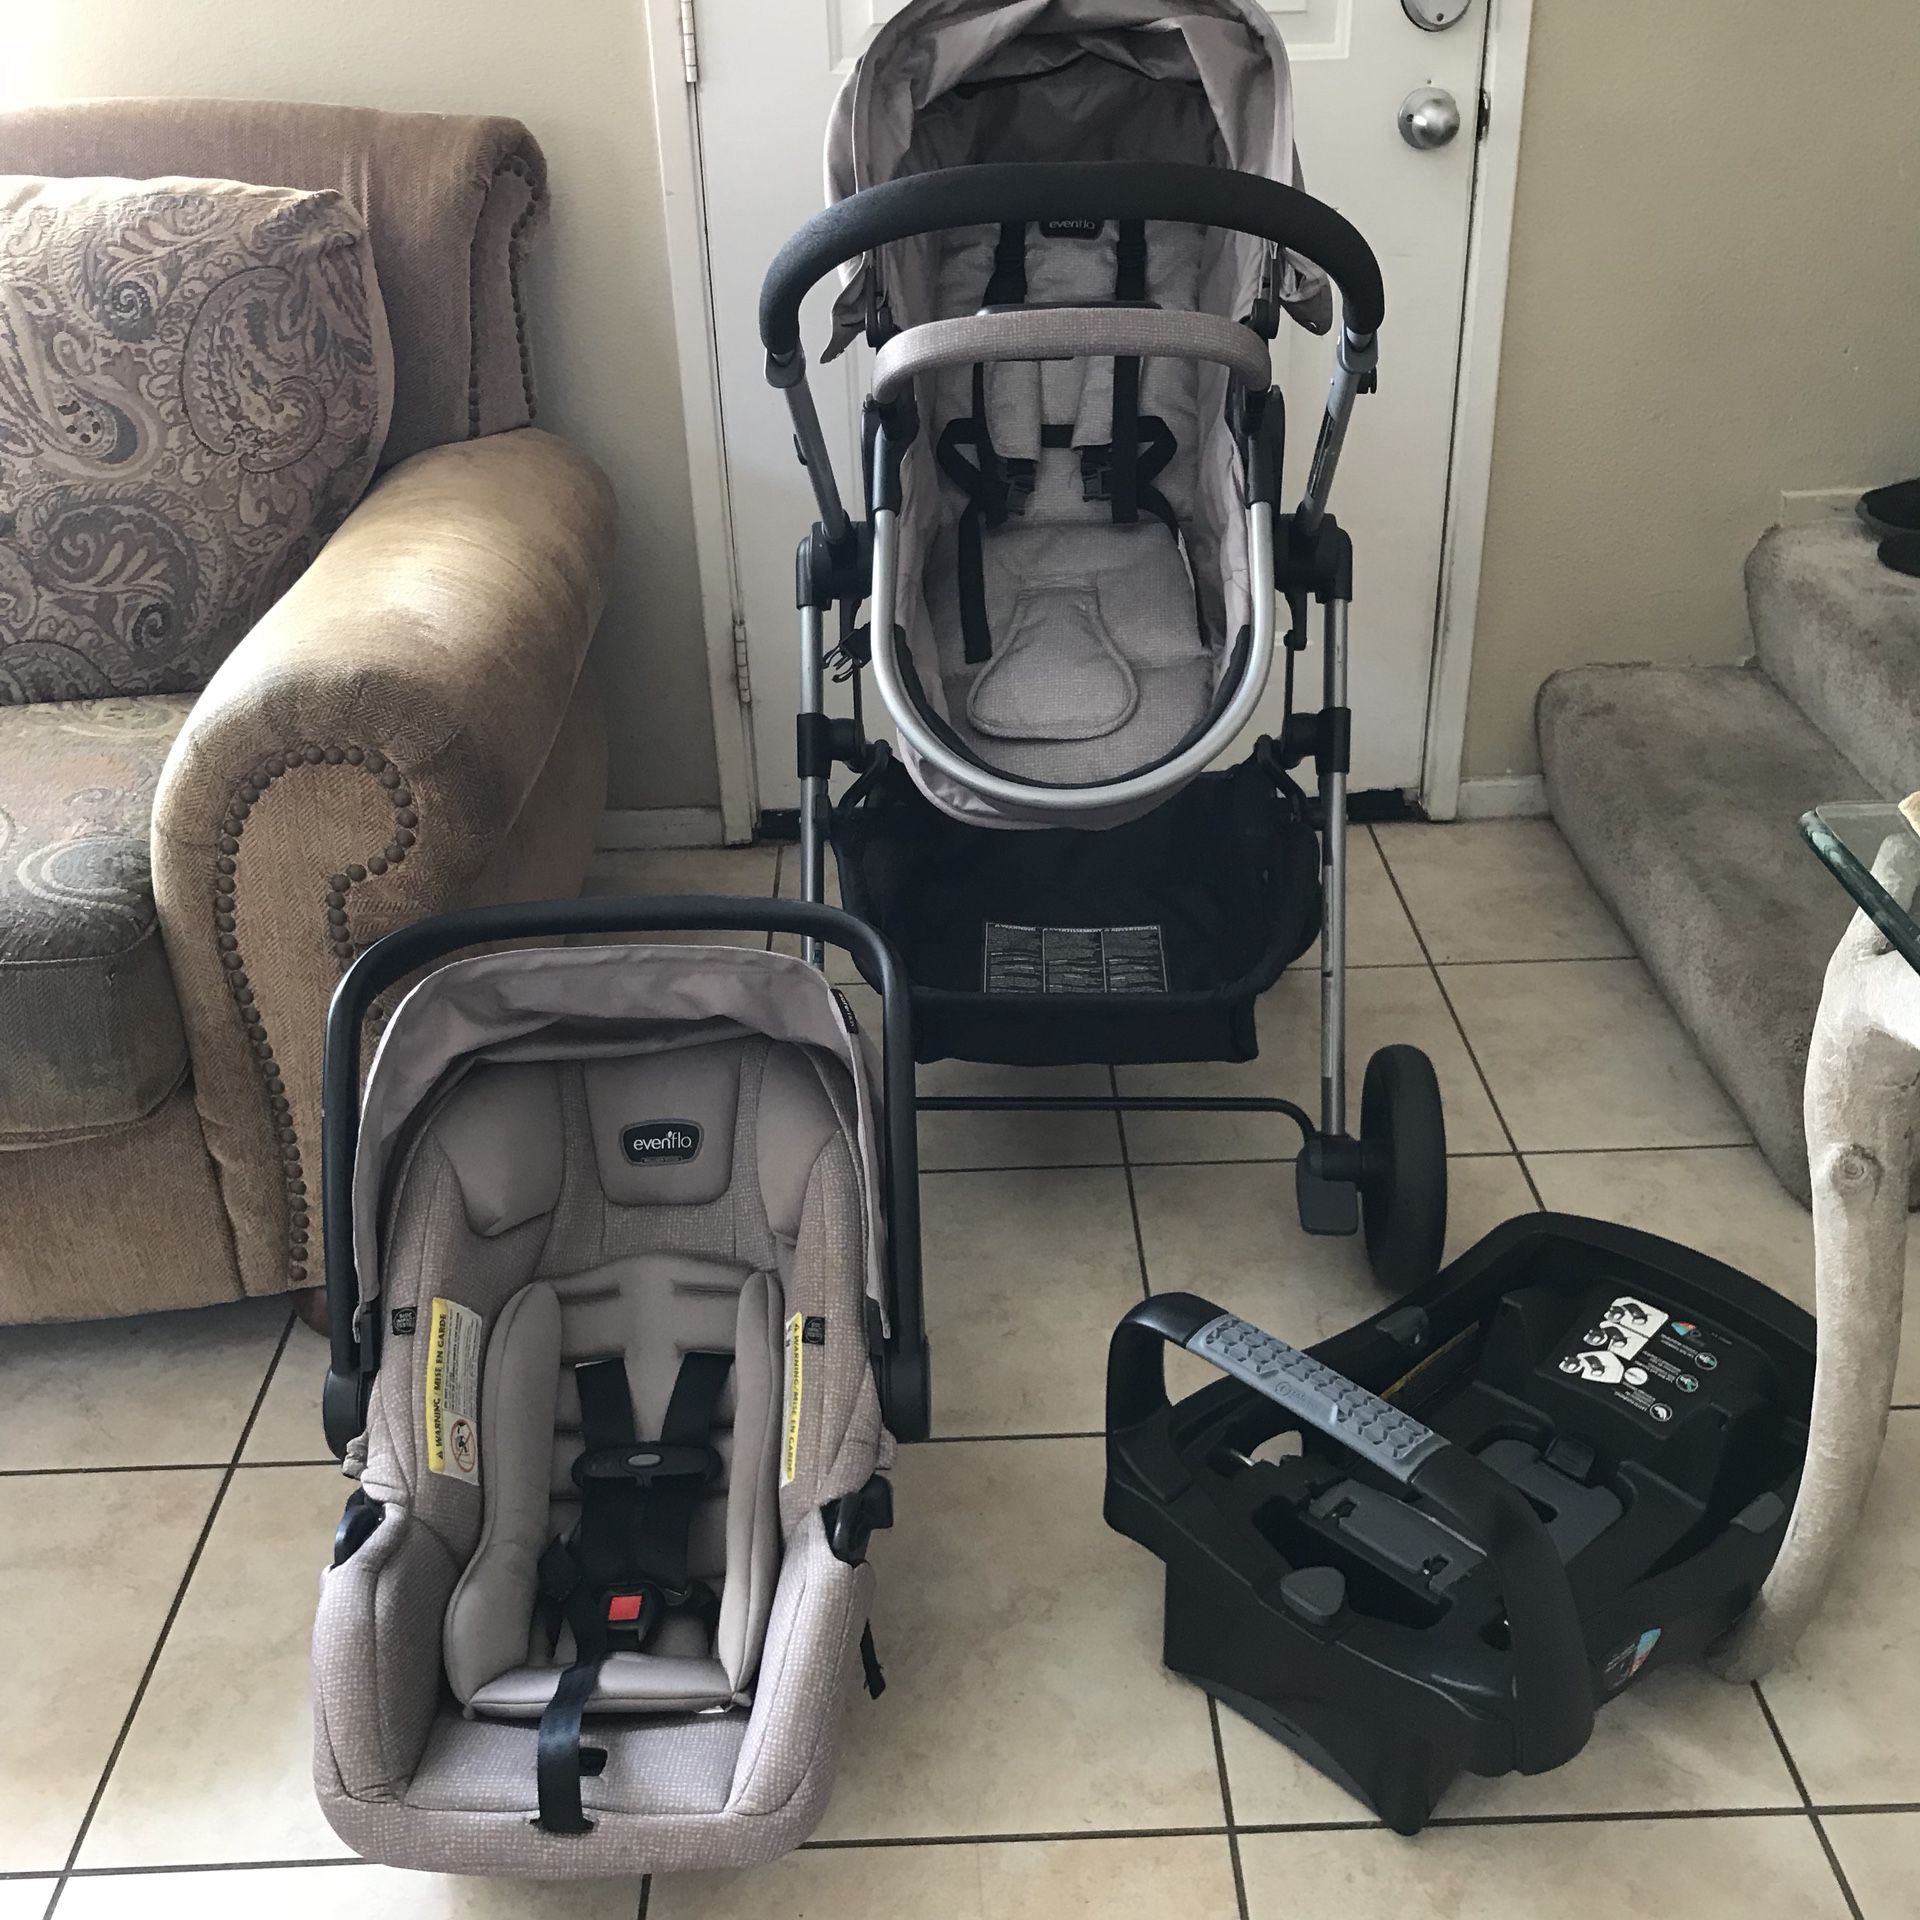 Evenflo Pivot Modular Travel System (stroller/car seat)